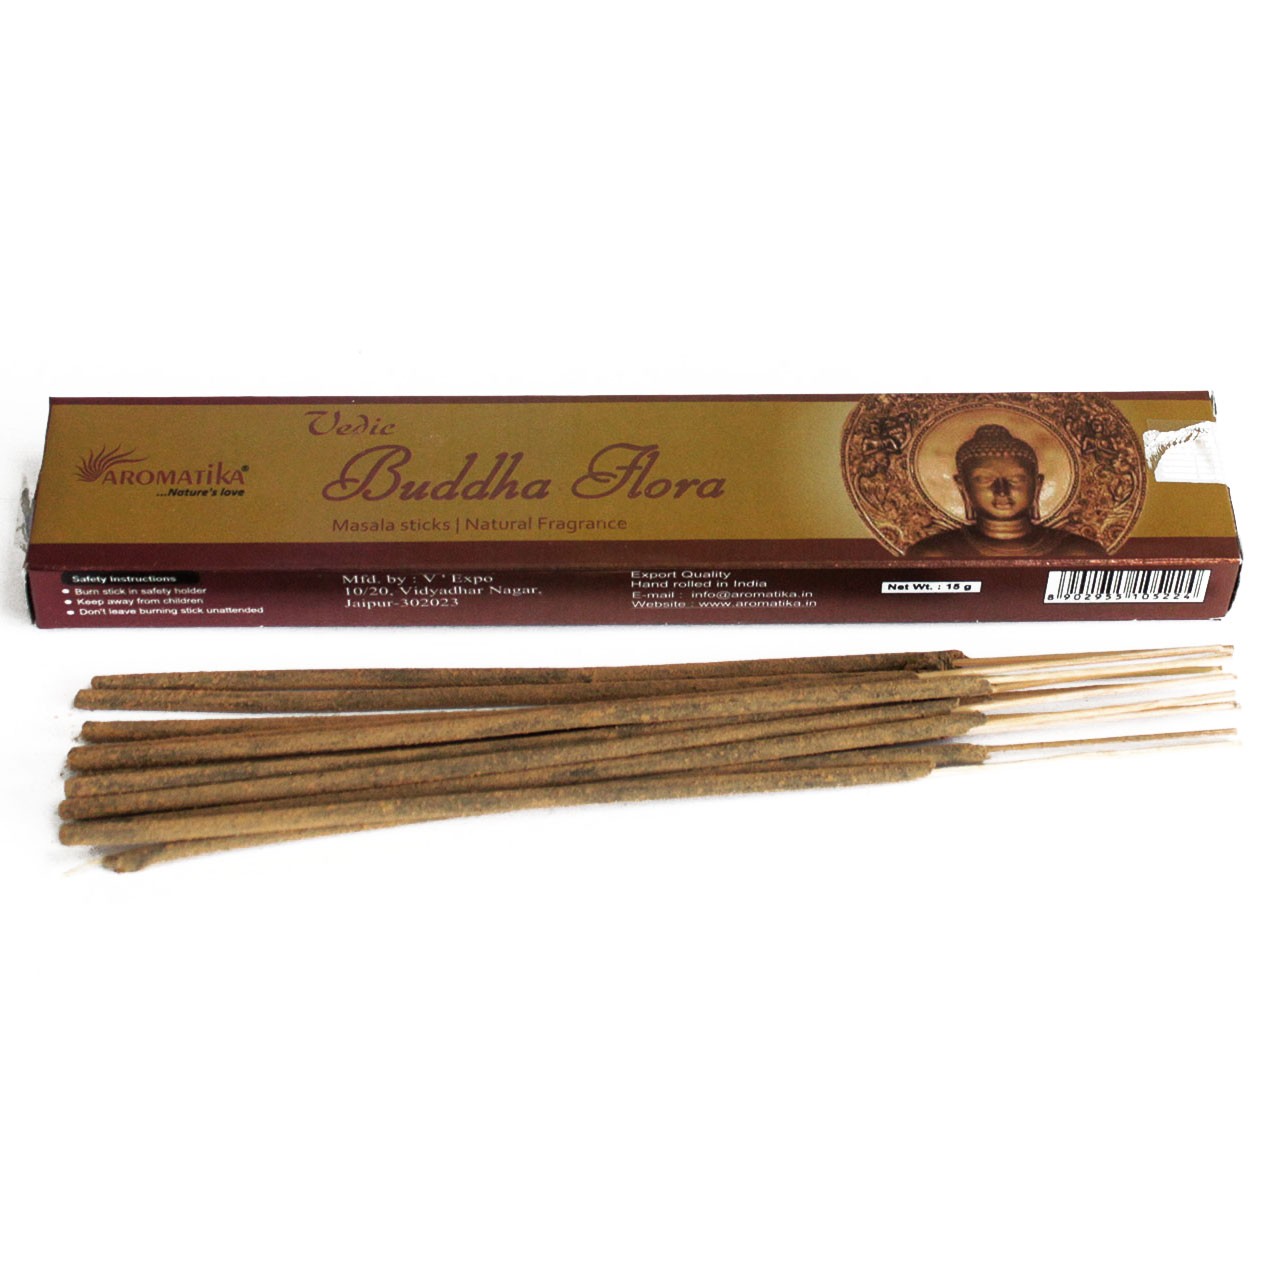 5 x Packs Vedic Incense Sticks - Buddha Flora